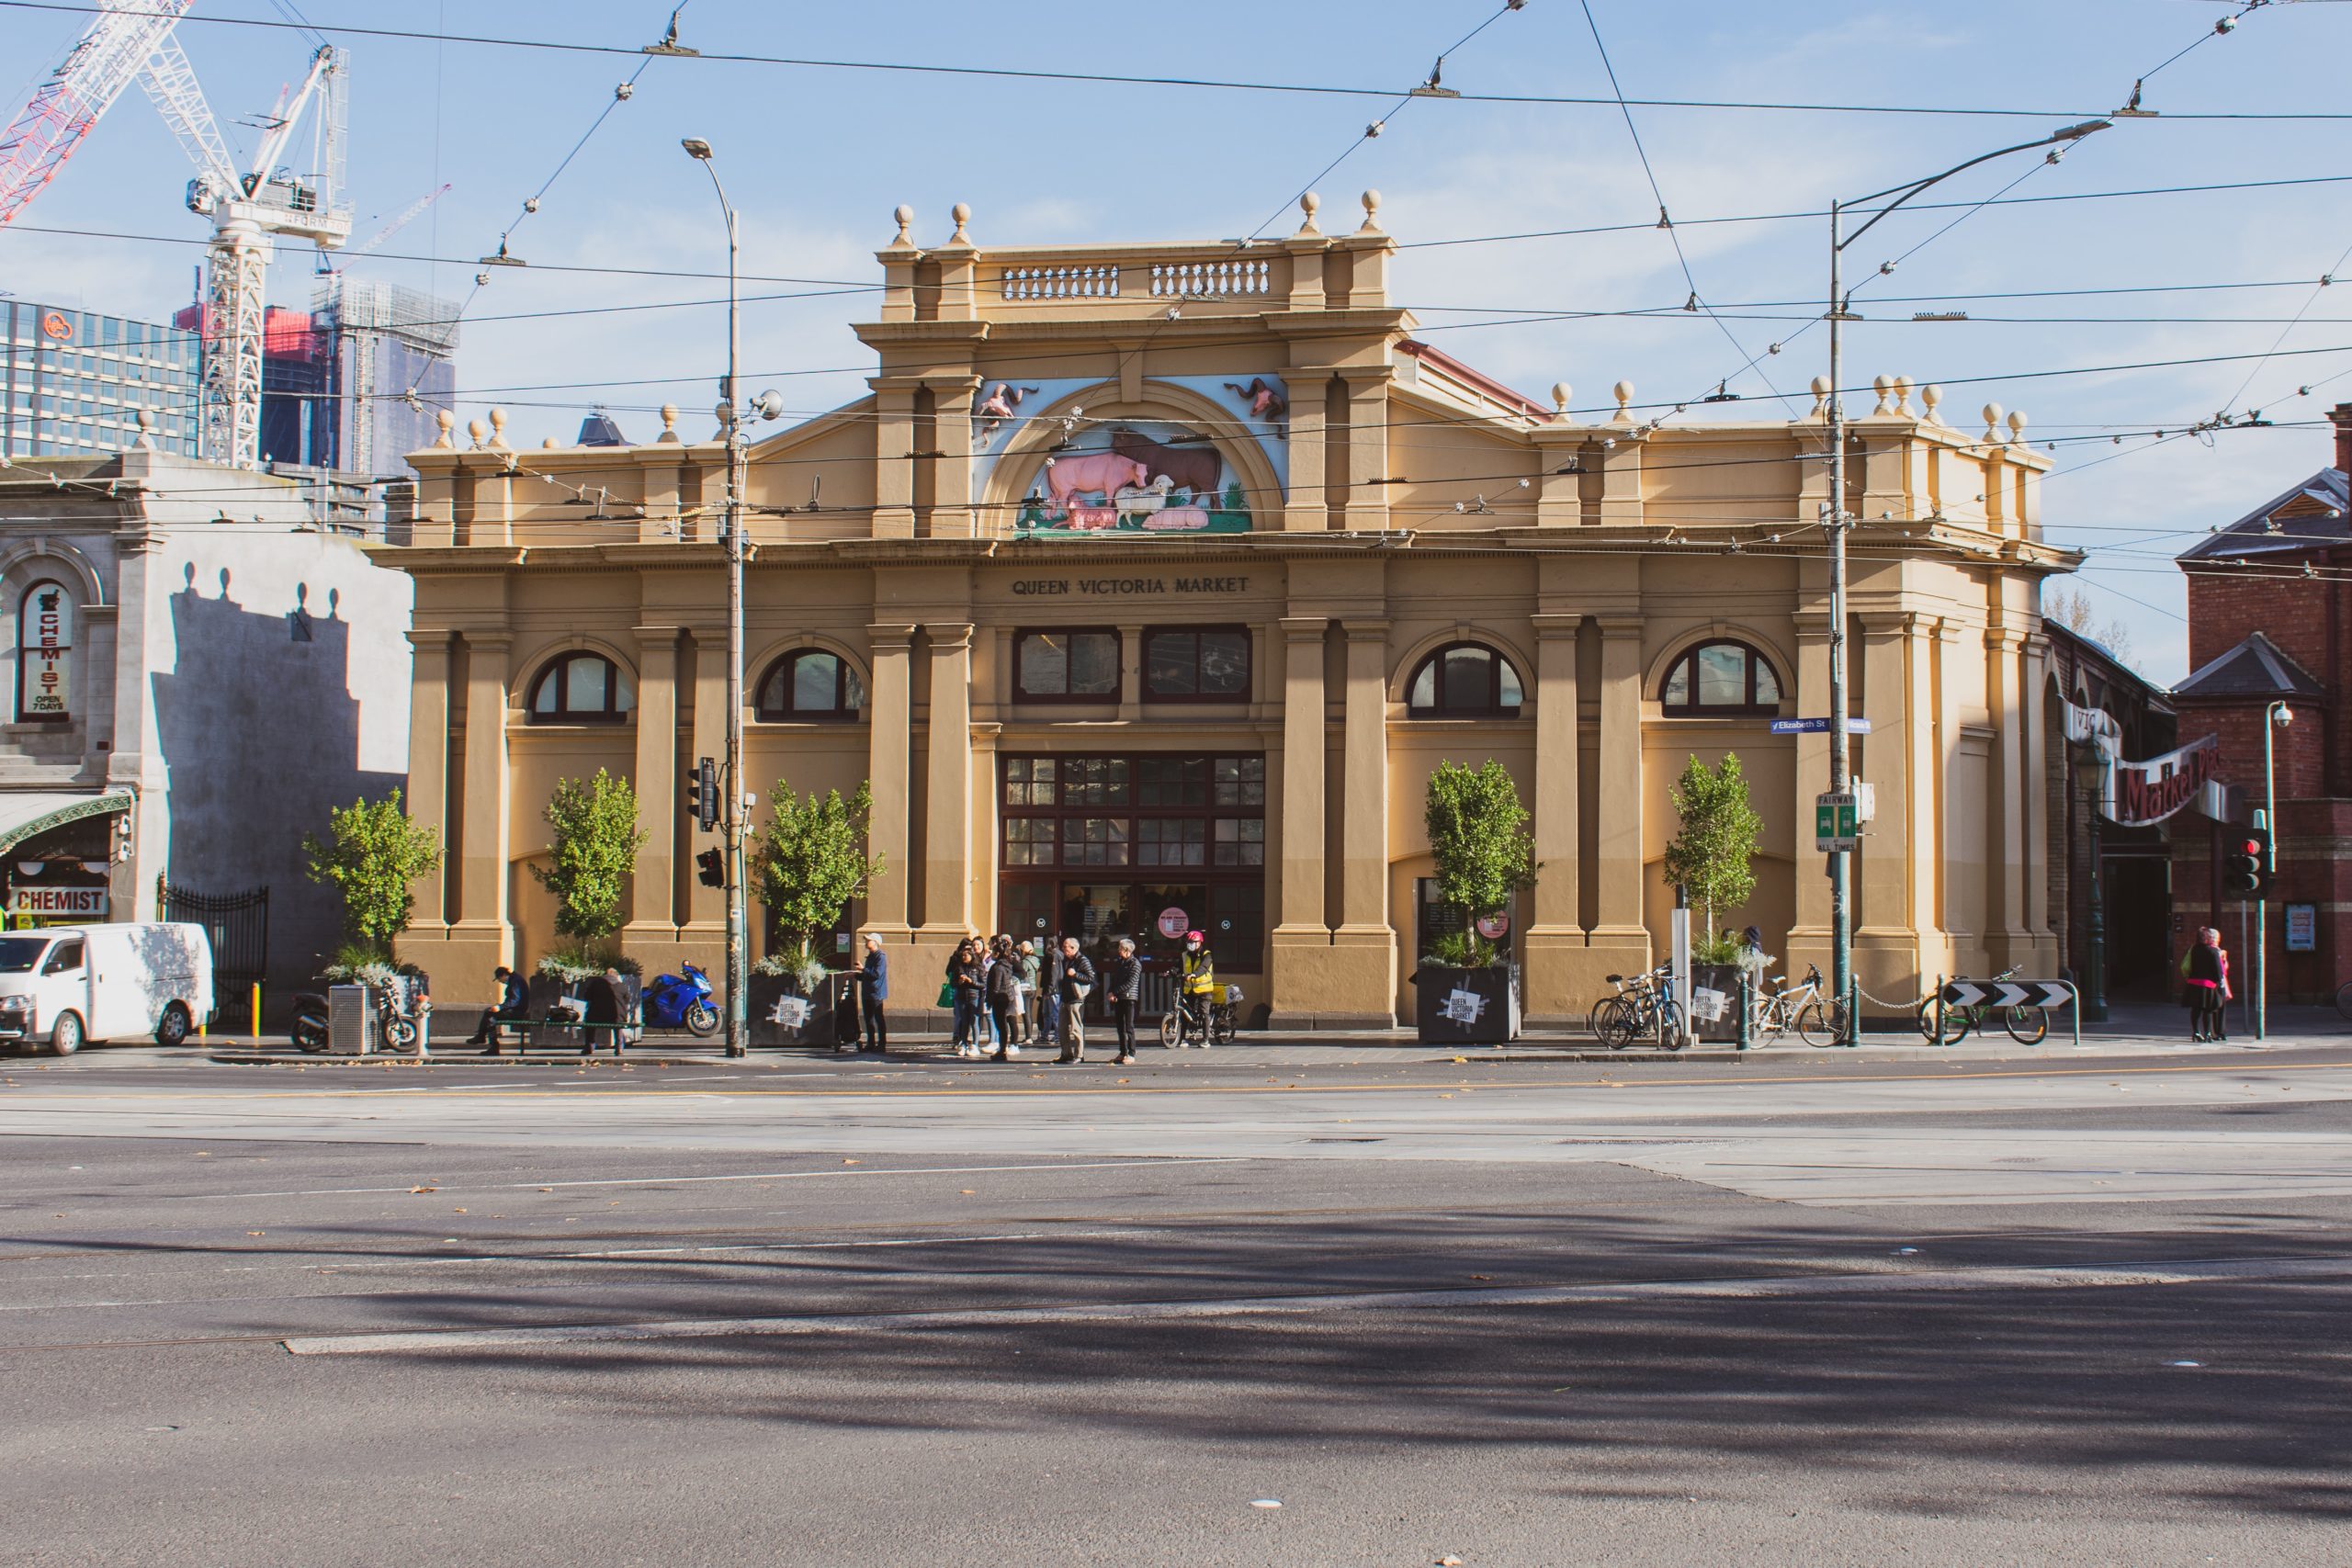 Queen Victoria Market, Melbourne VIC, Australia.